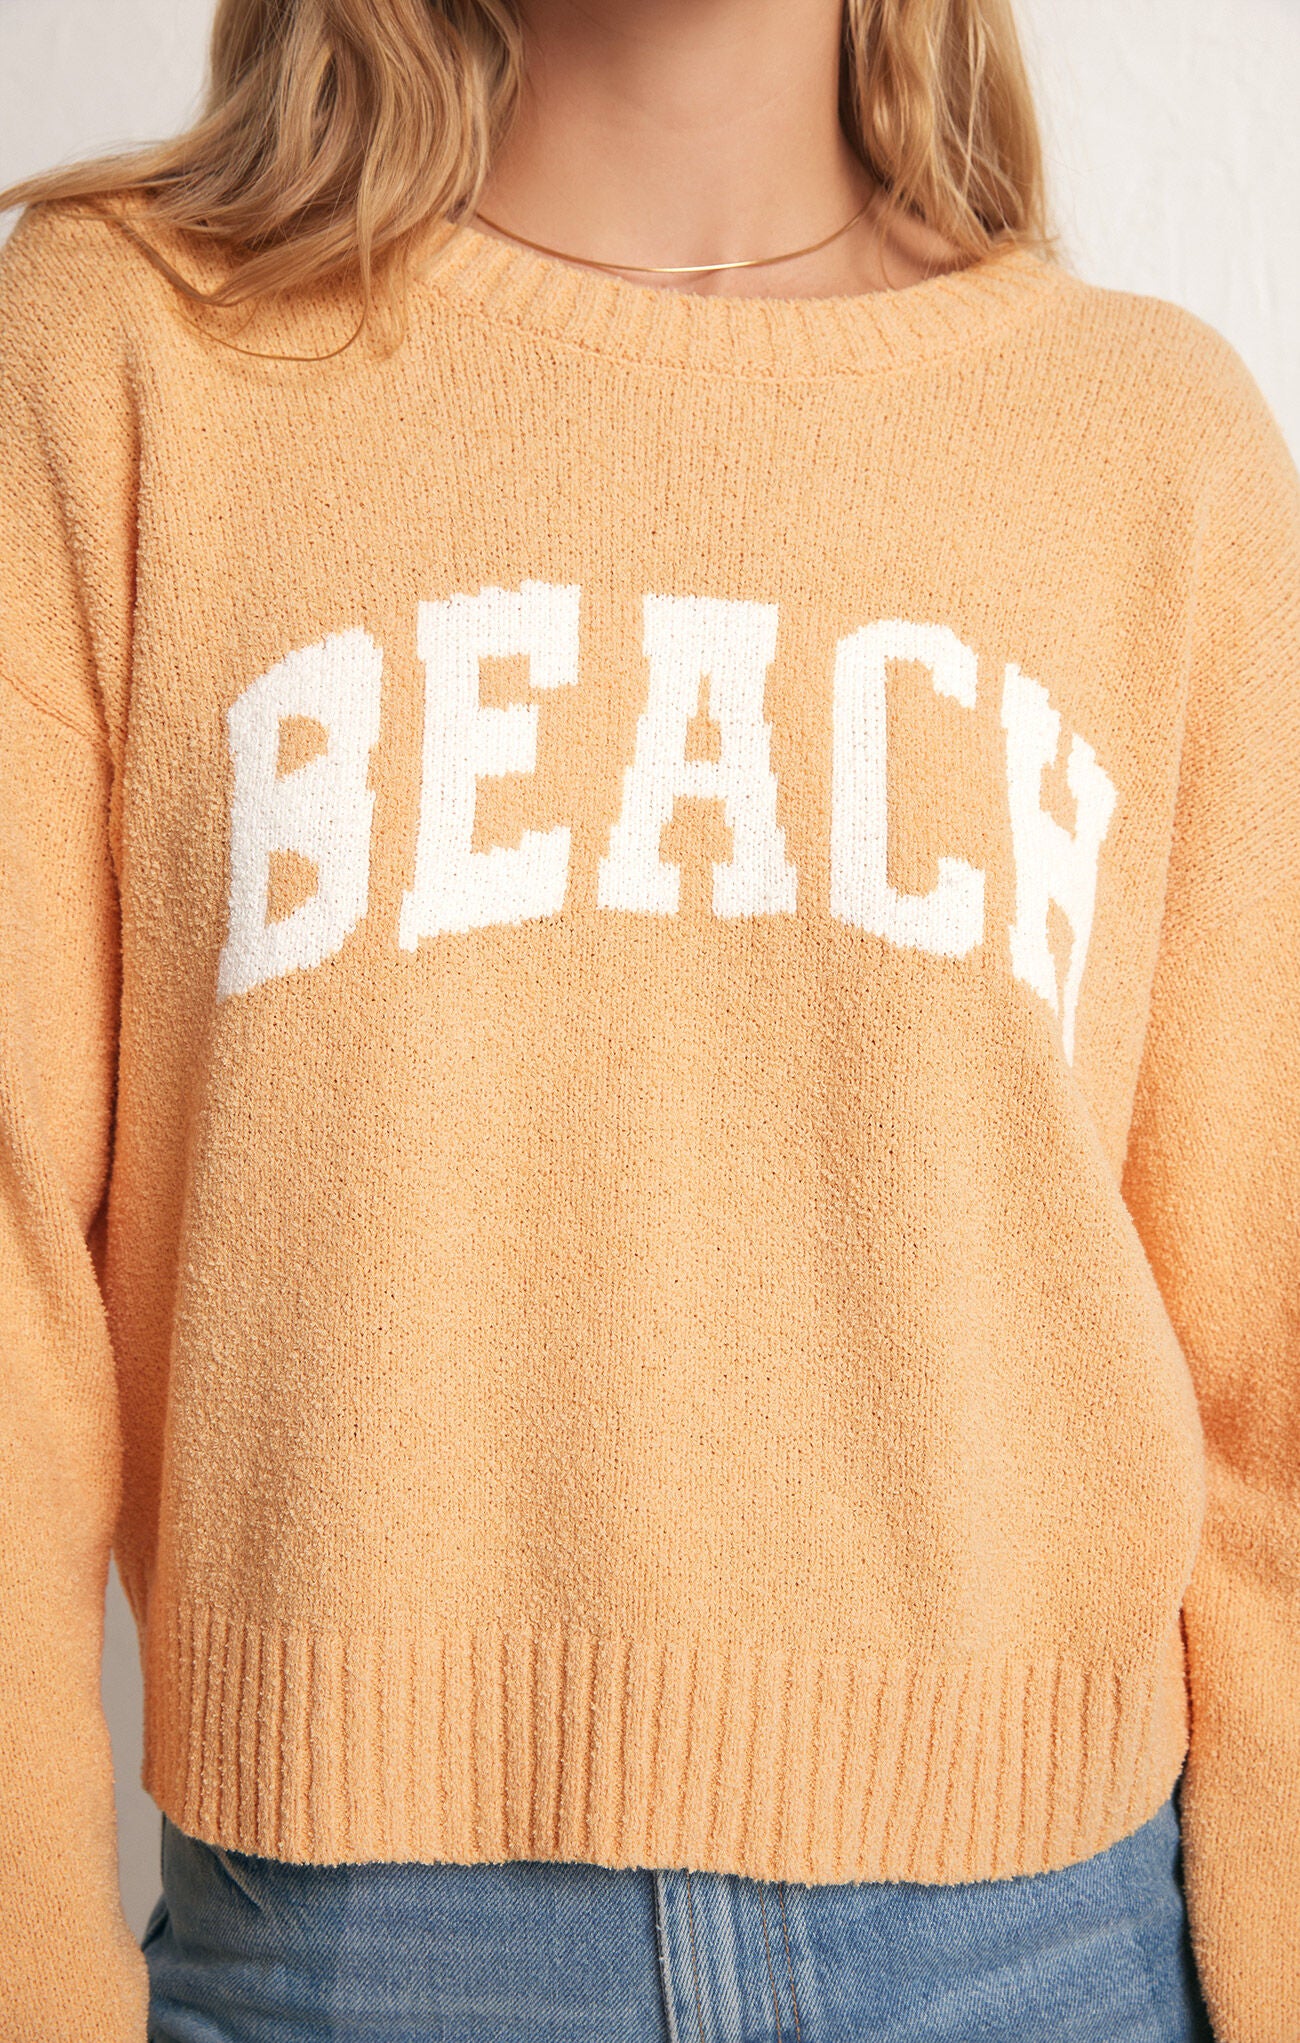 BEACH Sweater Orange Cream - FINAL SALE